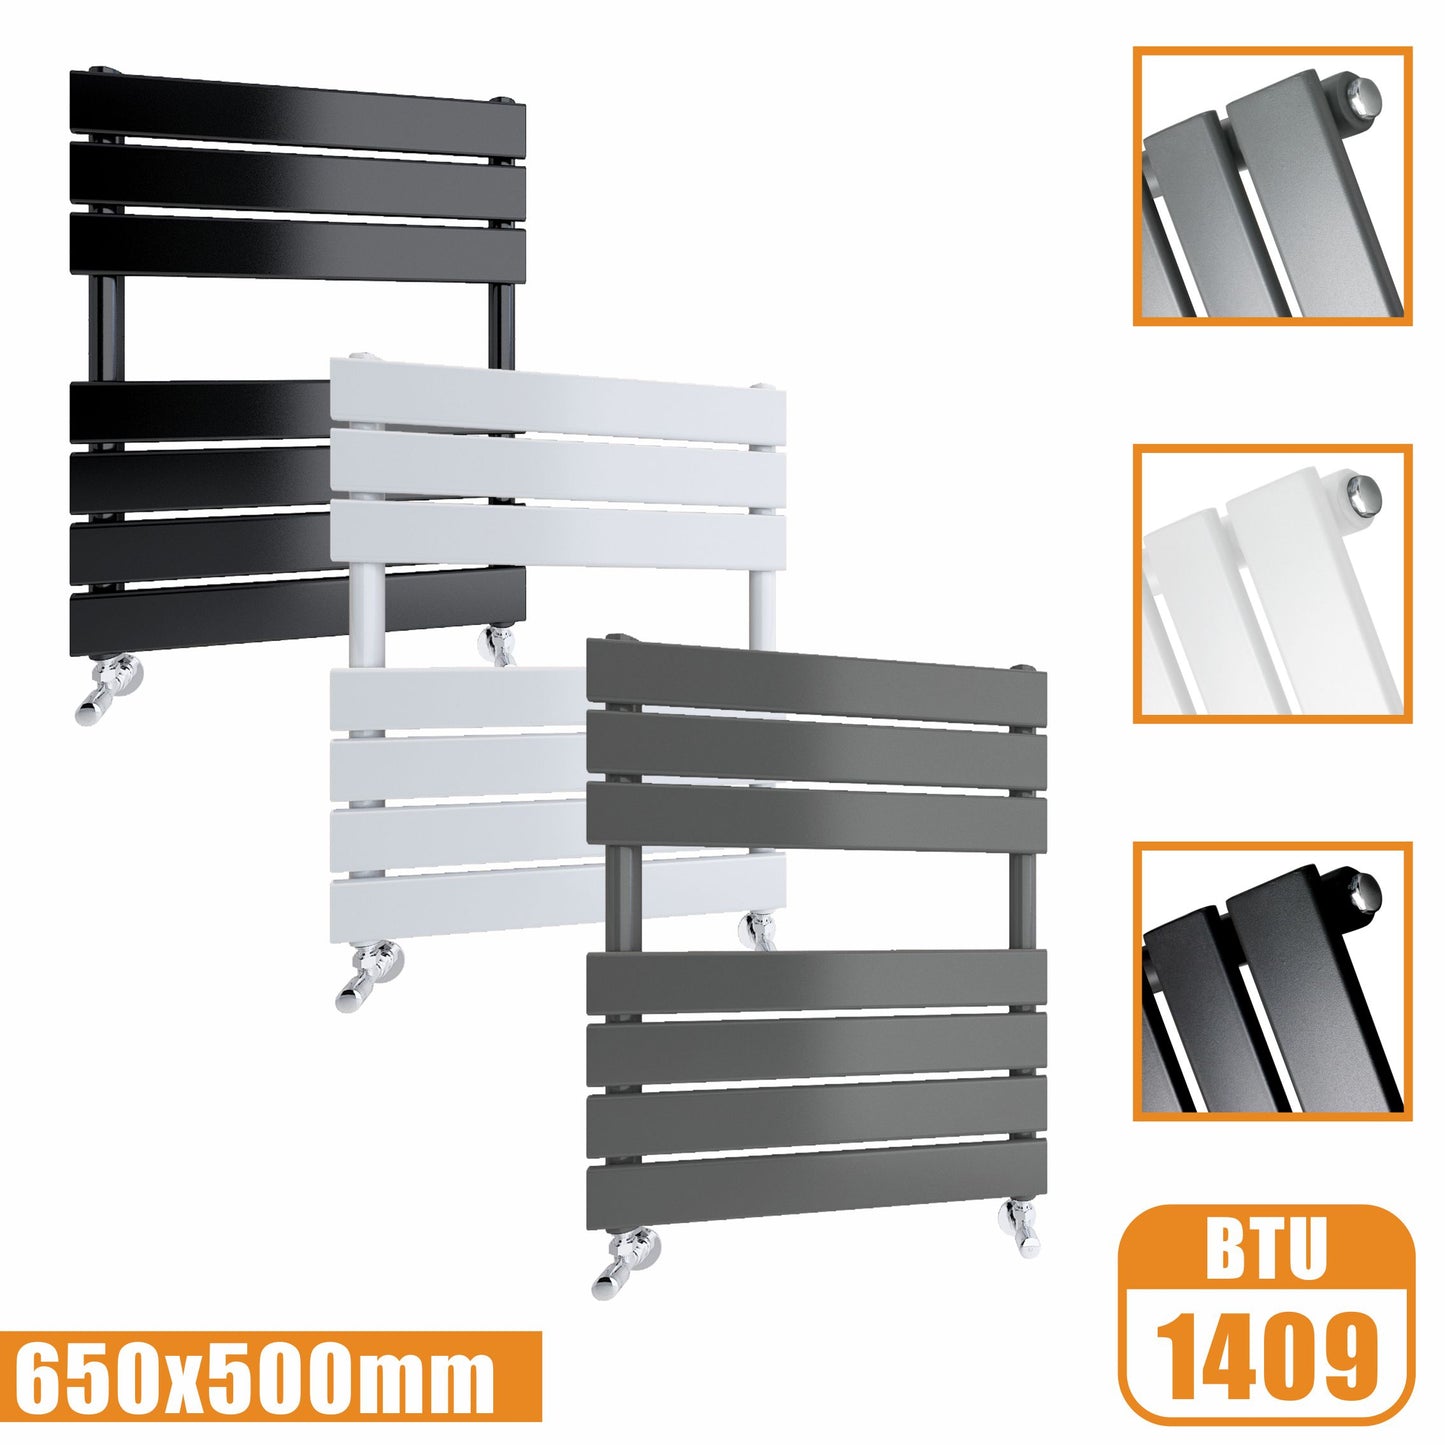 Flat Panel Heated Towel Rail ladder Radiator Anthracite White Black 650x500MM AICA